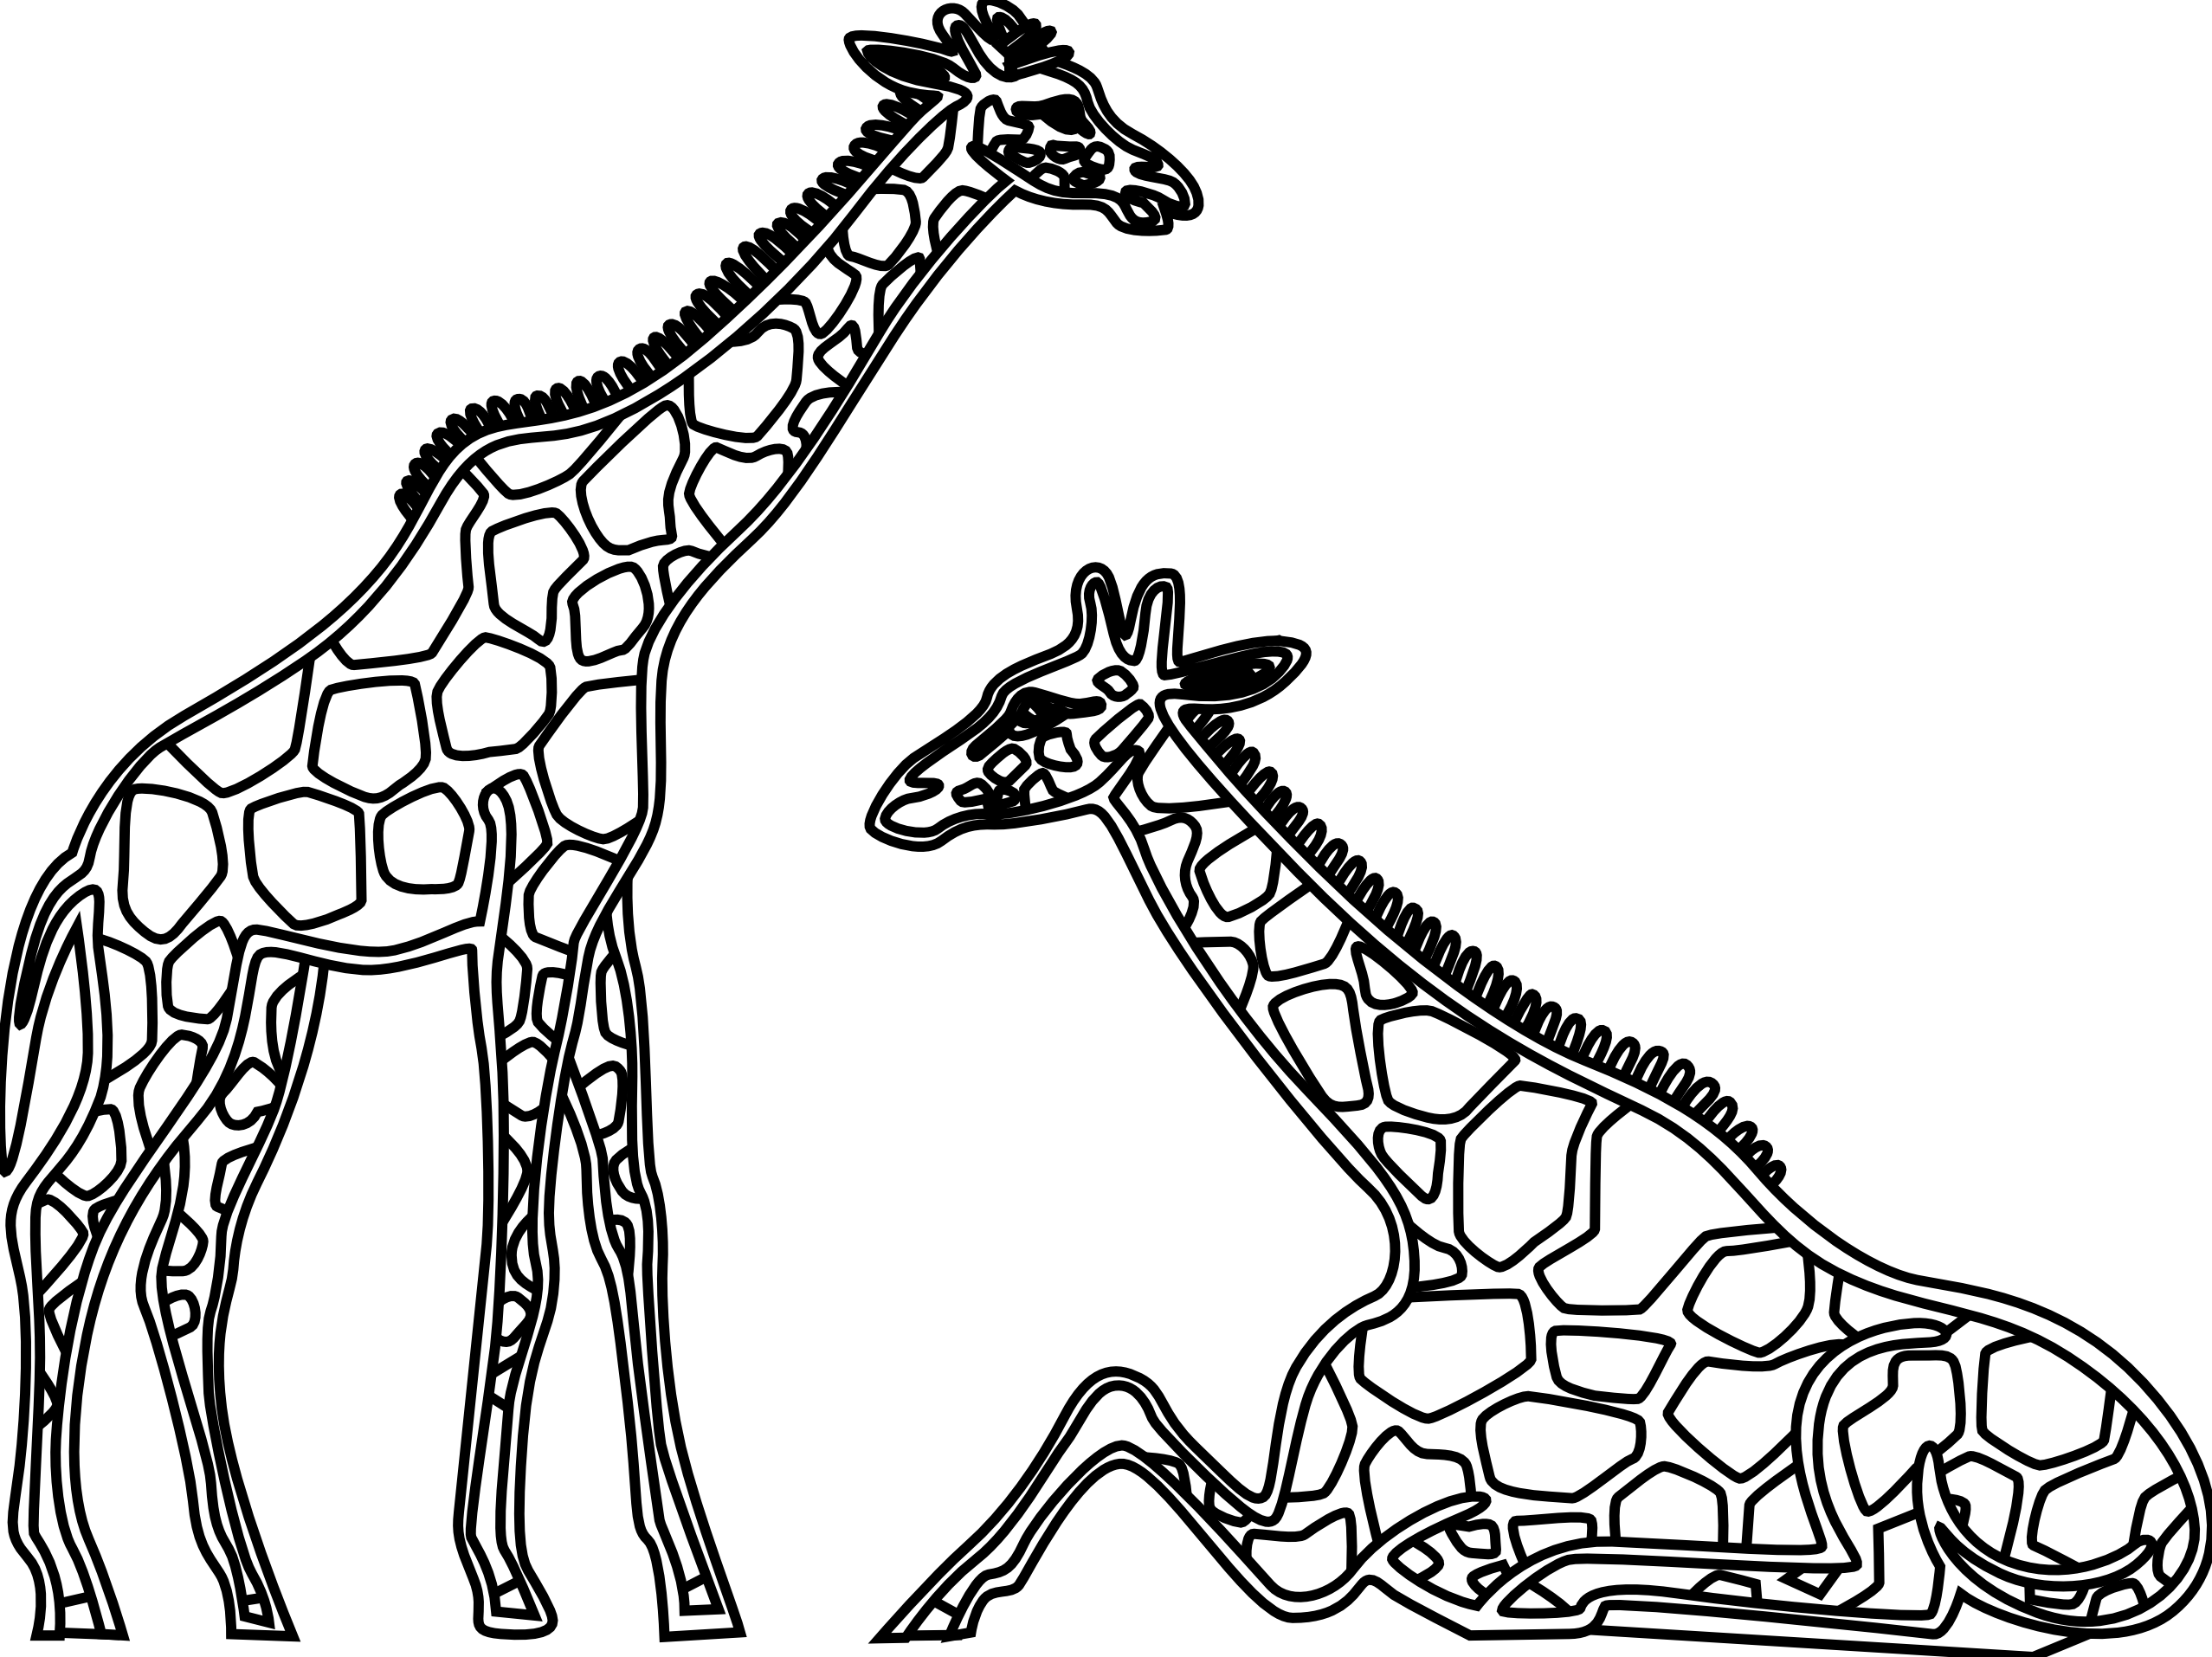 Zipper clipart draw. Black and white giraffe